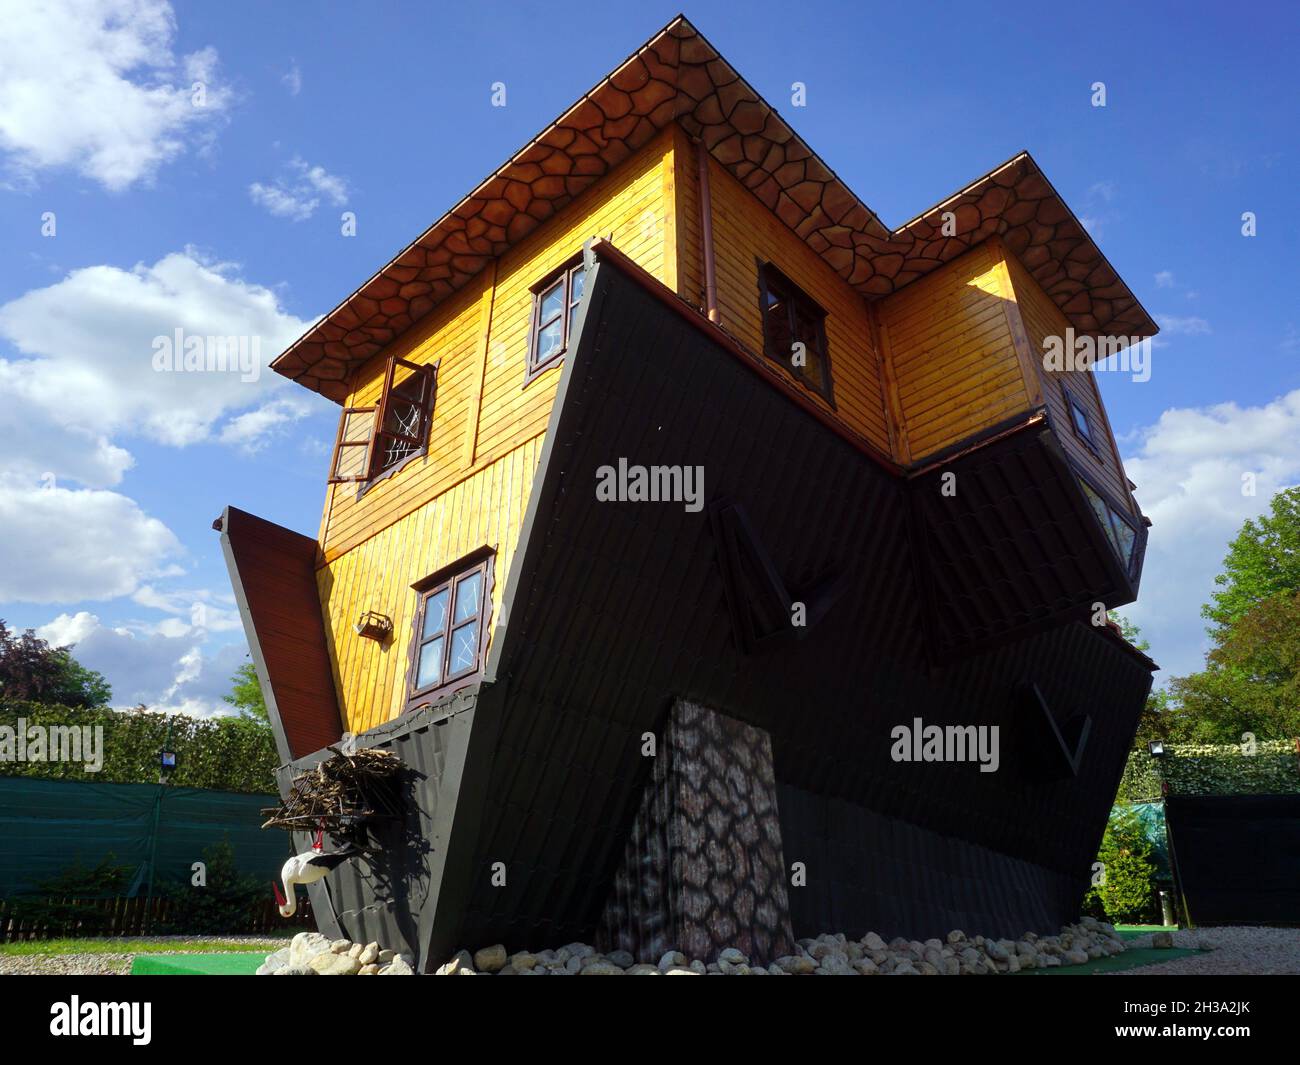 Upside down house, tourist attraction, Zakopane, Poland, May 2018 Stock Photo